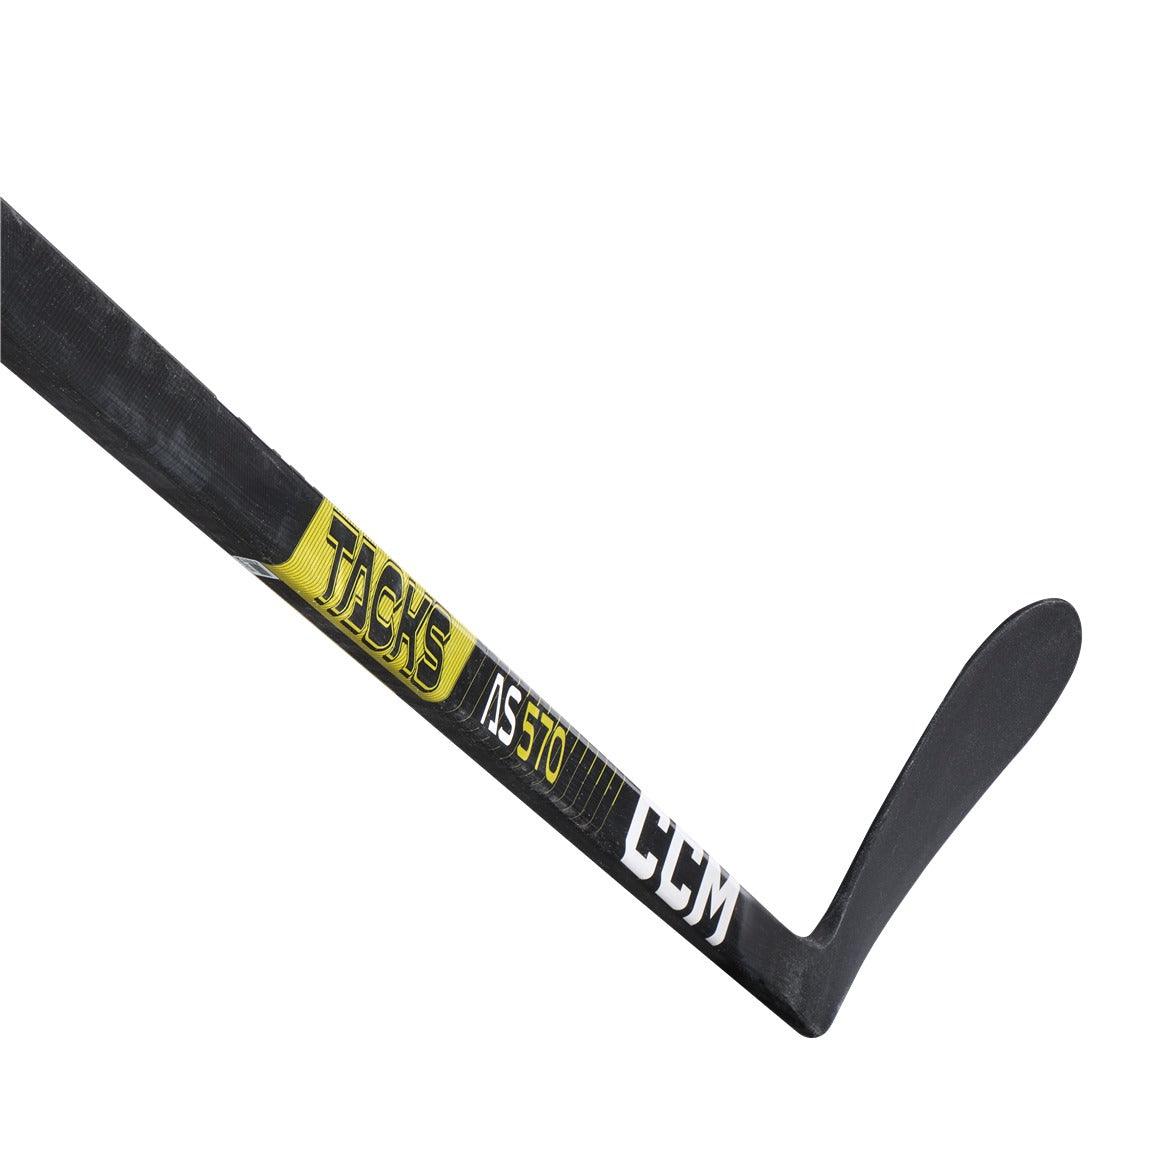 Tacks AS570 Hockey Stick - Senior - Sports Excellence